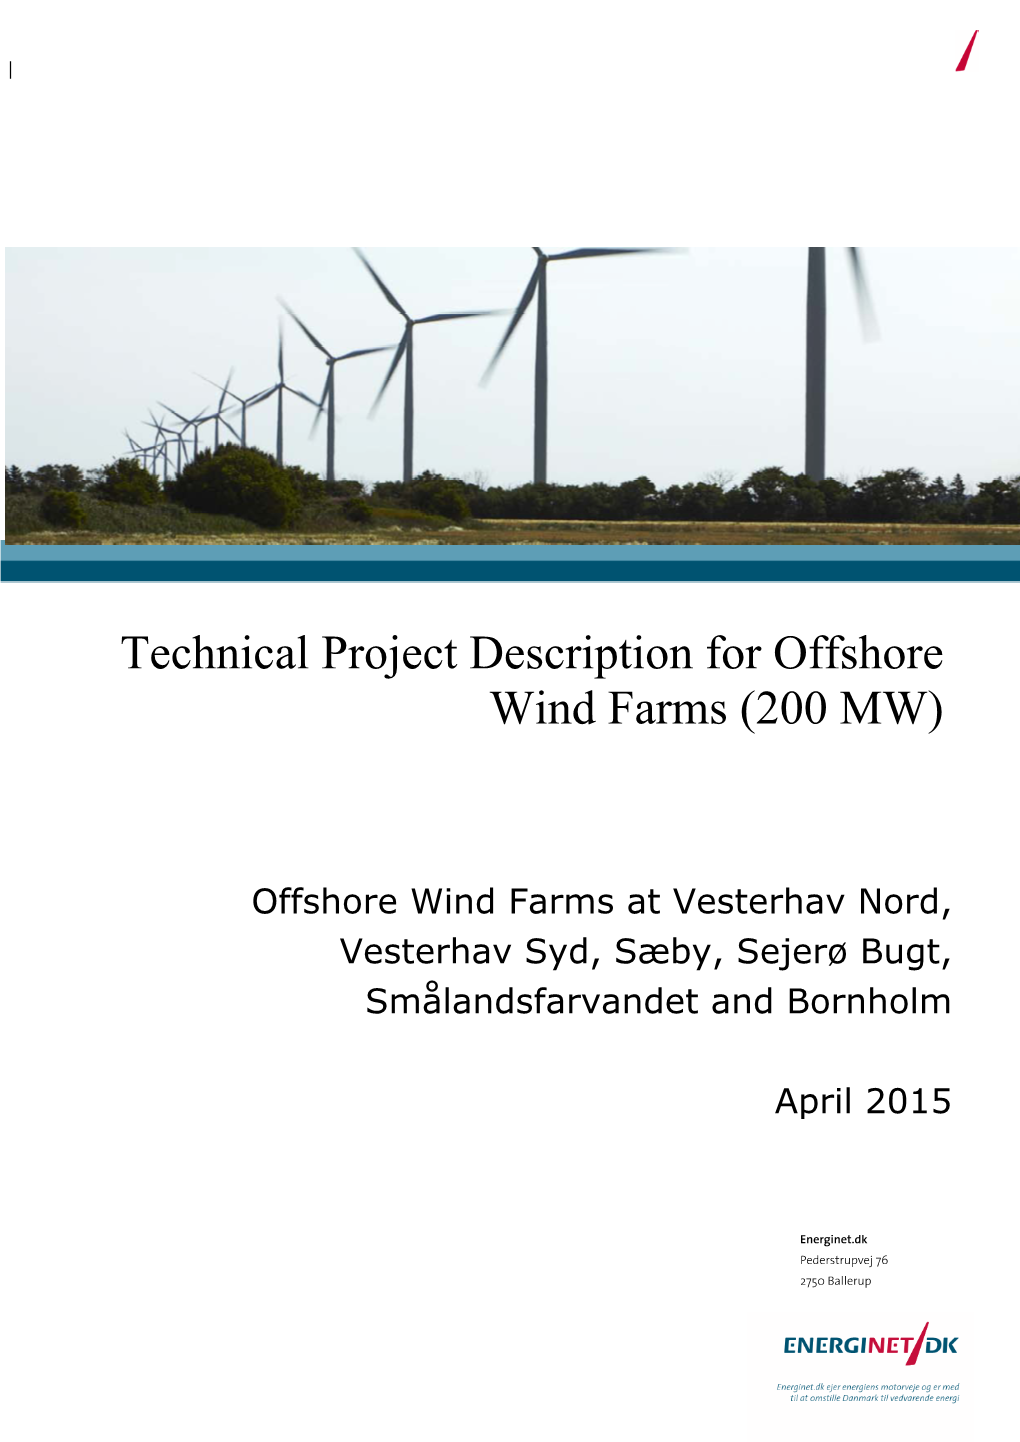 Technical Project Description for Offshore Wind Farms (200 MW)